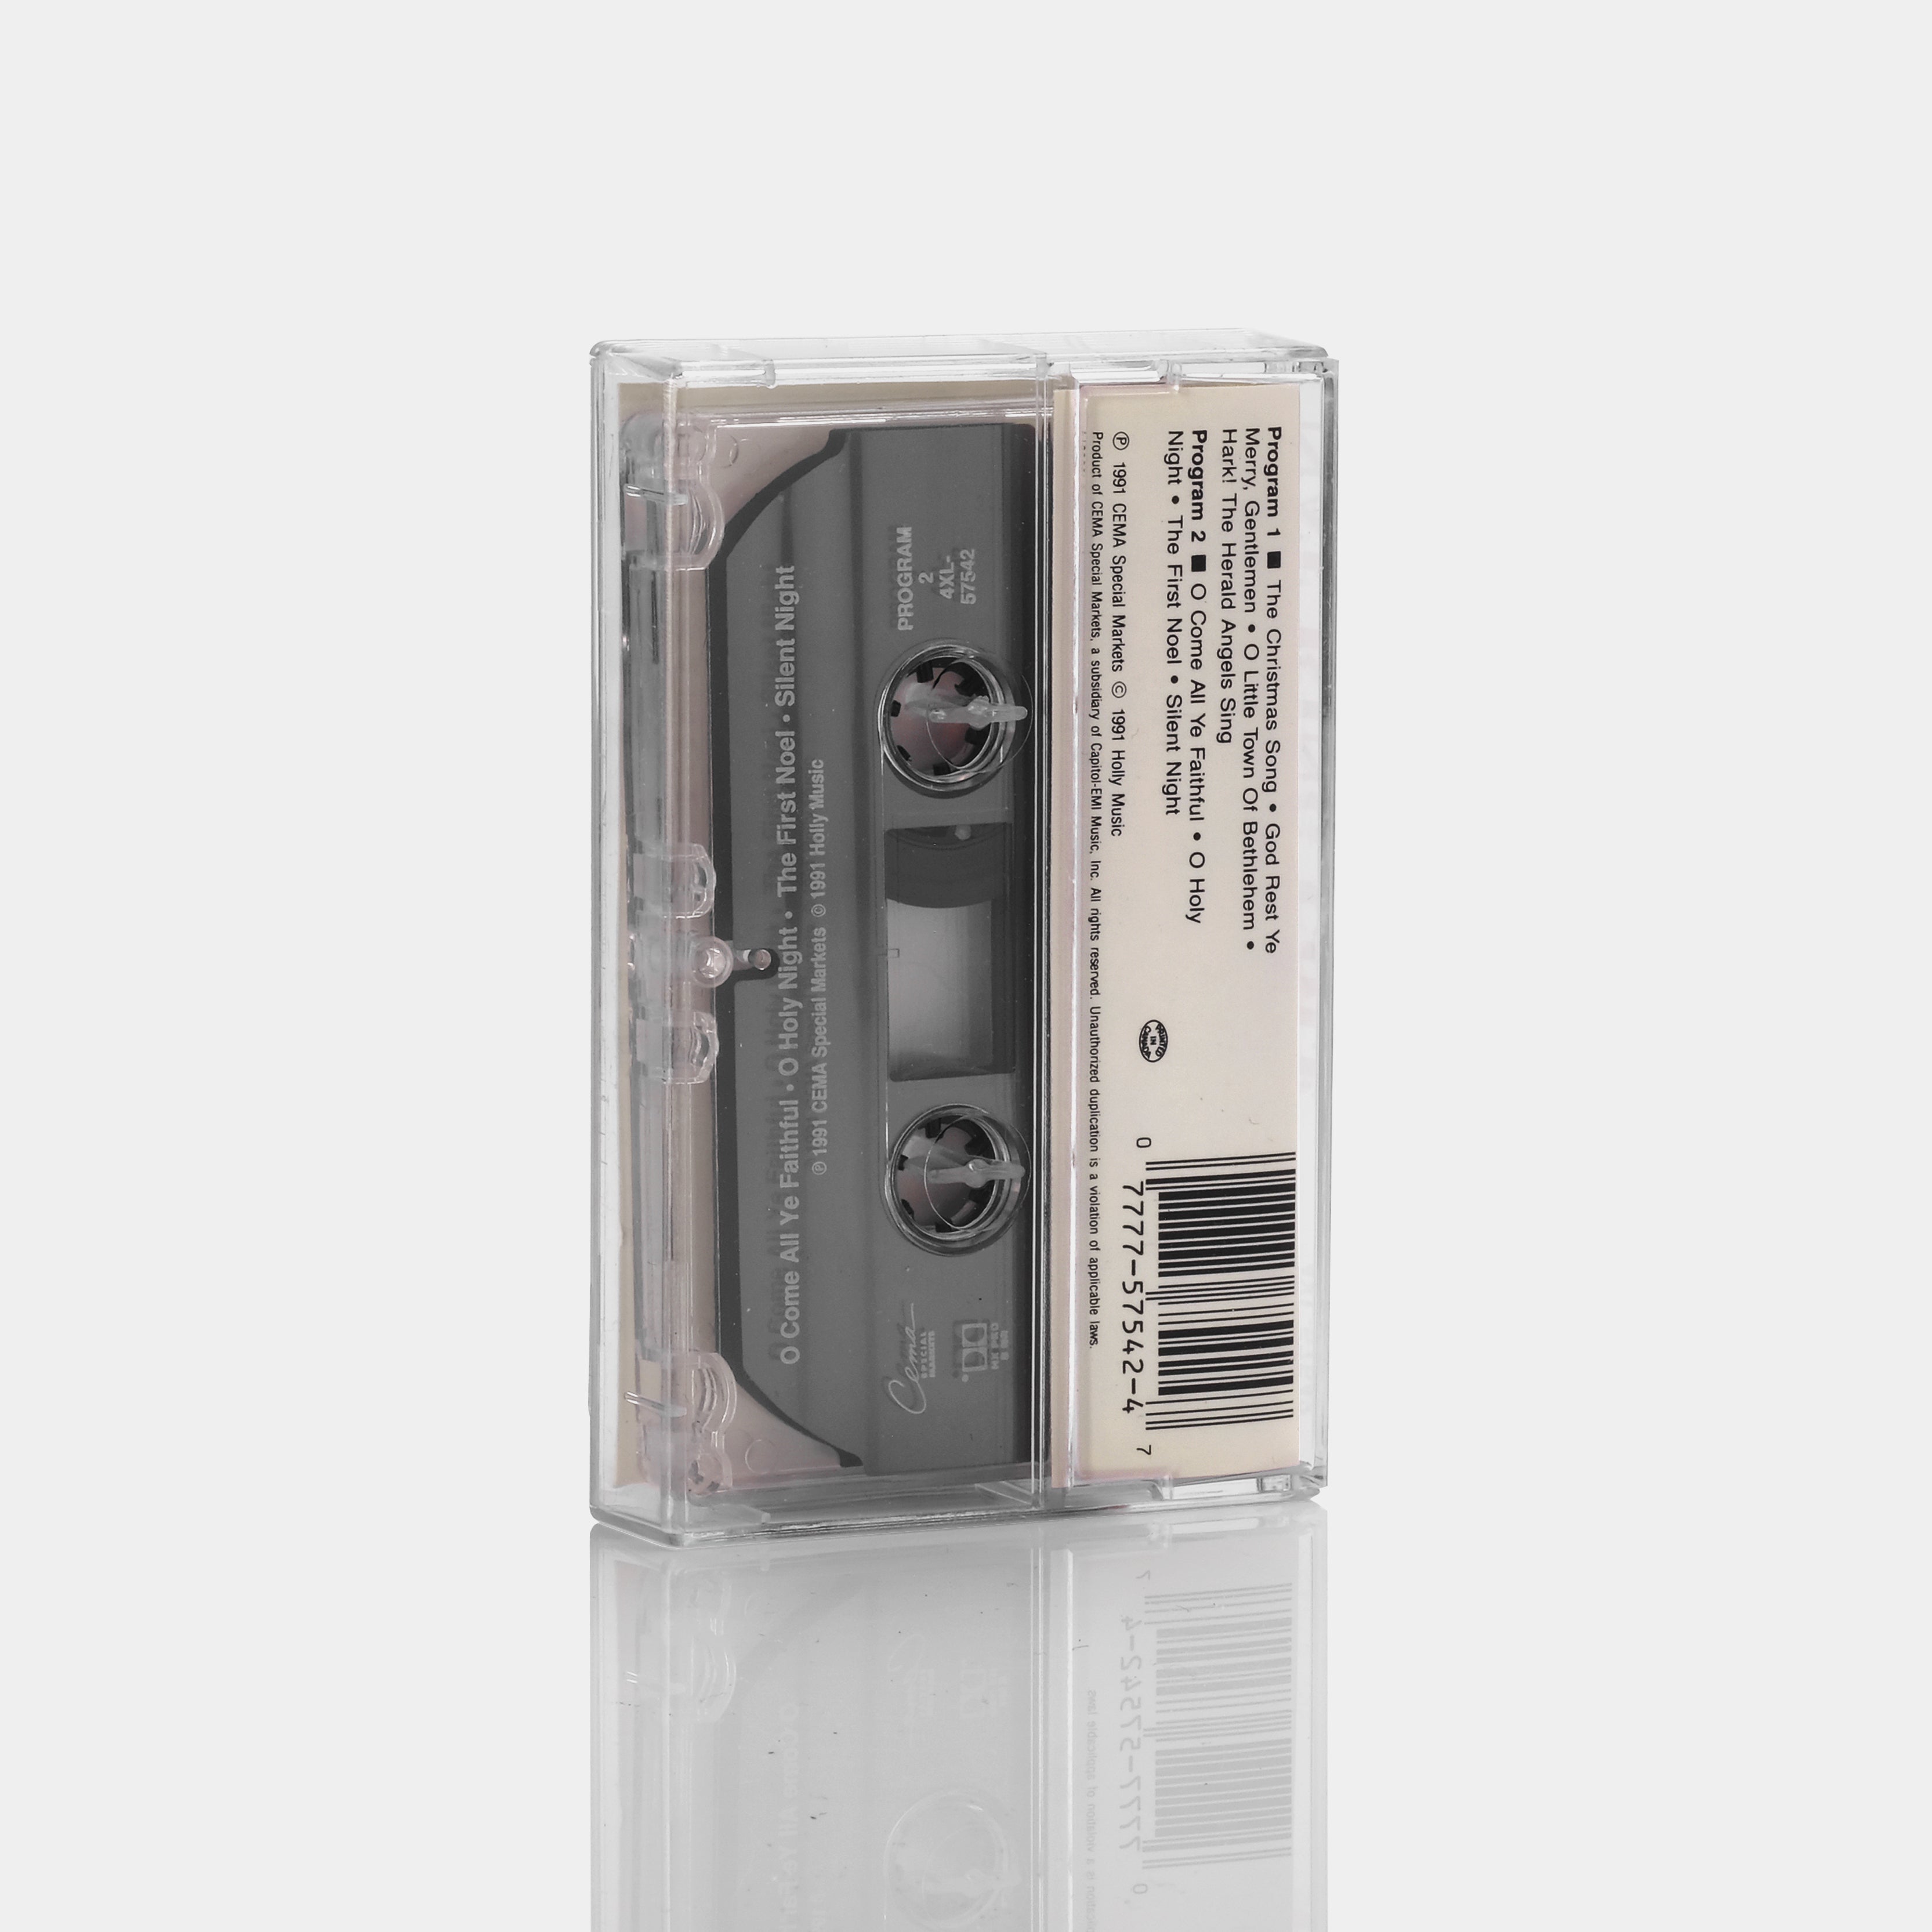 Nat King Cole - Chestnuts Roastin' Cassette Tape